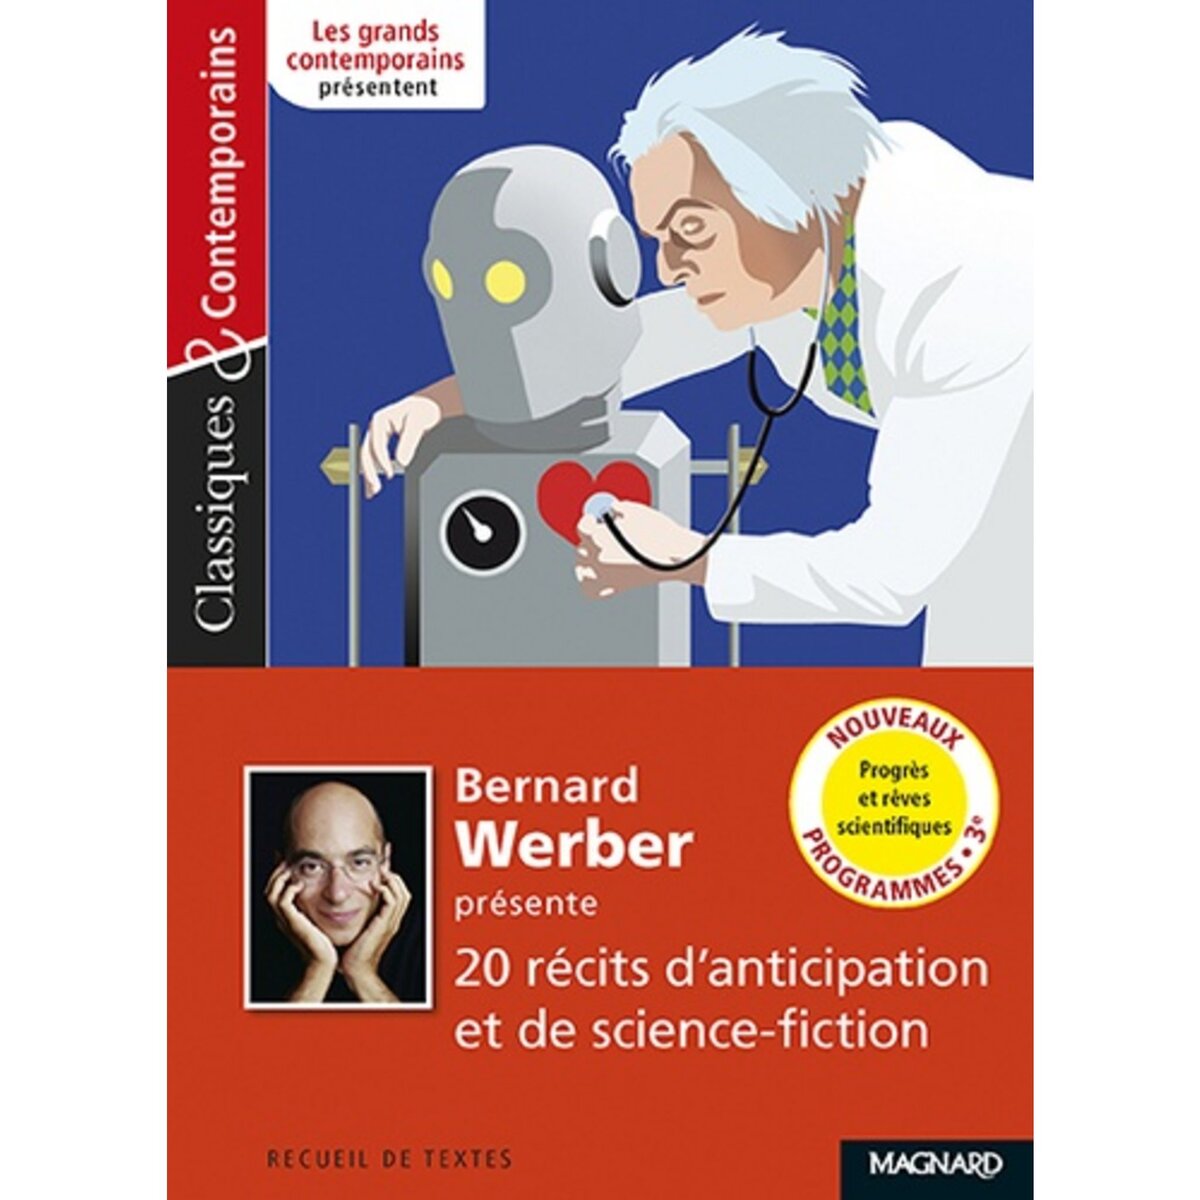  BERNARD WERBER PRESENTE 20 RECITS D'ANTICIPATION ET DE SCIENCE-FICTION. PROGRES ET REVES SCIENTIFIQUES, Werber Bernard